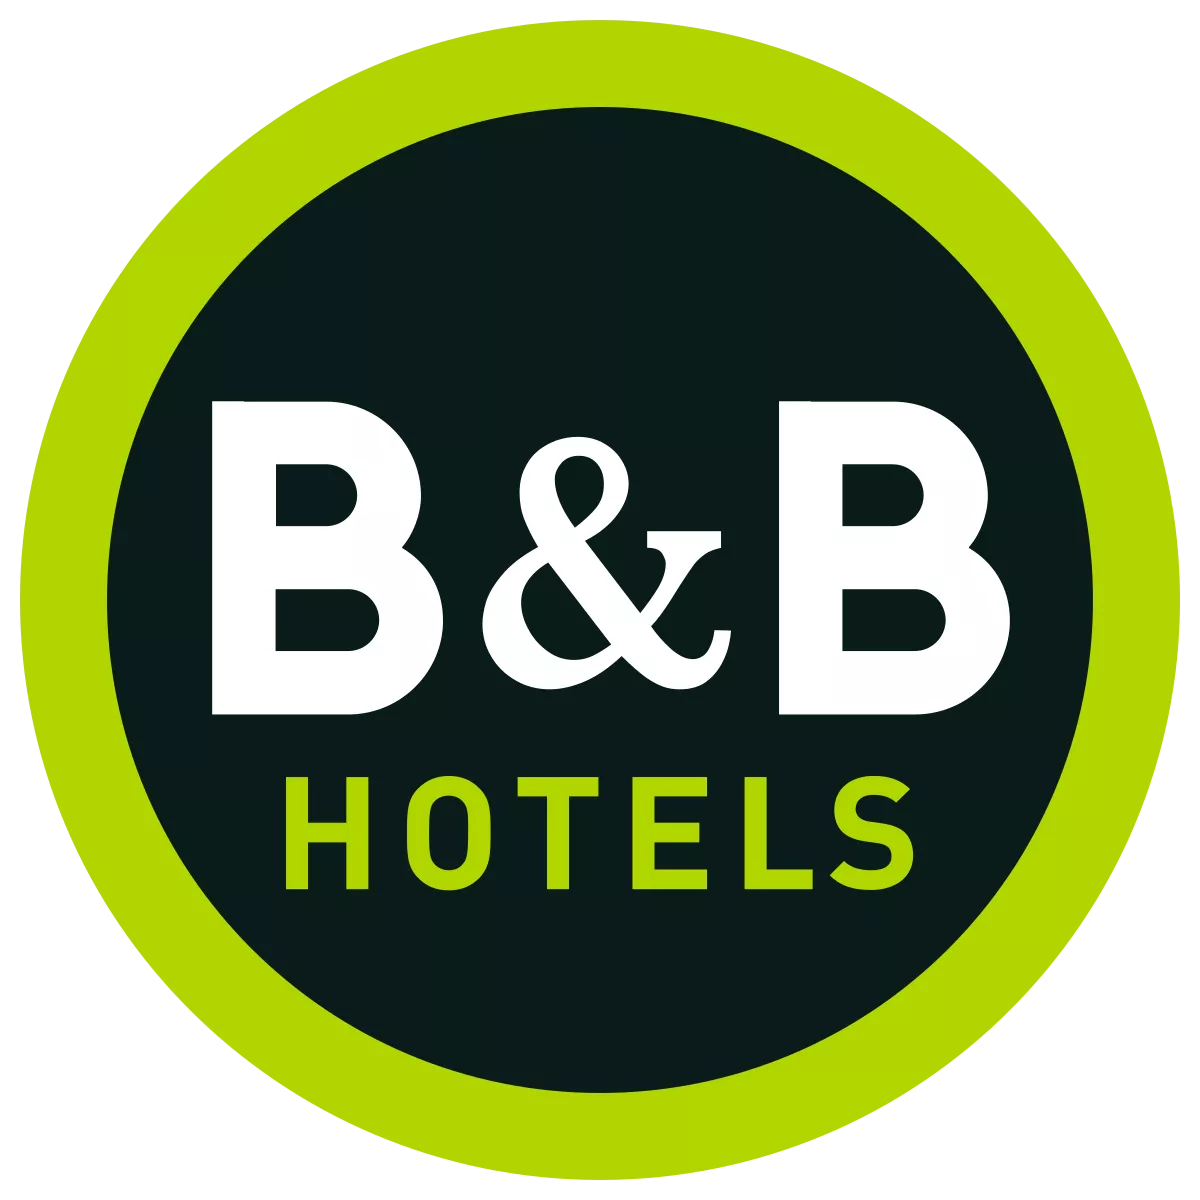 B&B Hoteles logo